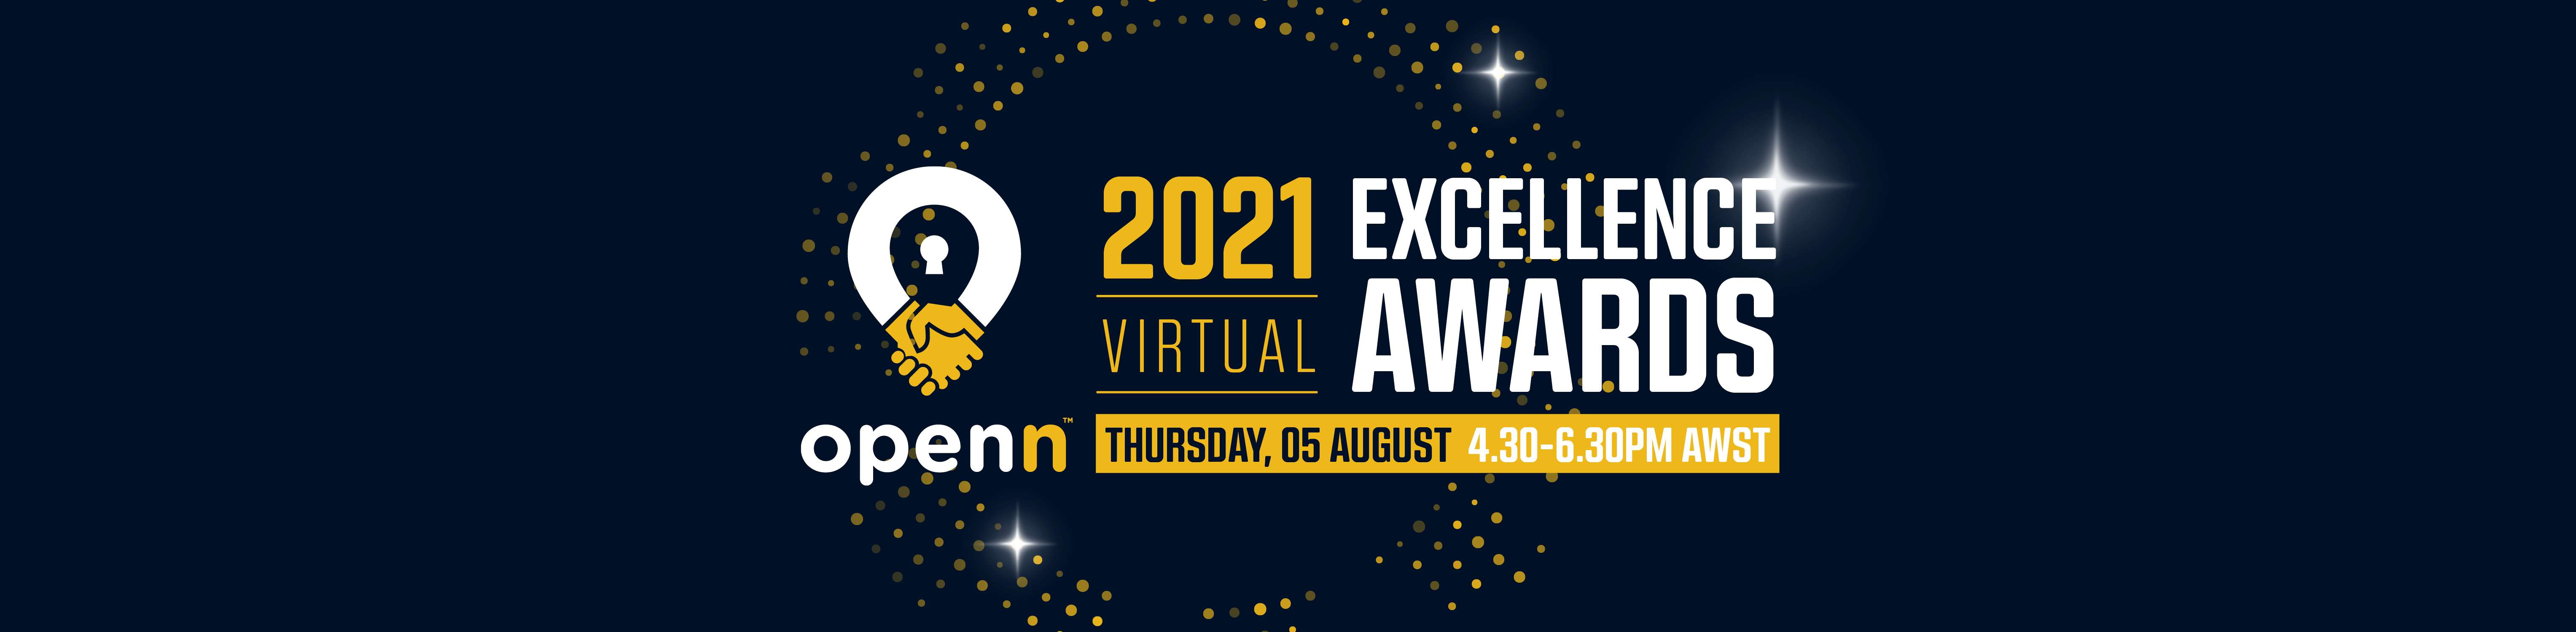 Openn Excellence Awards 2021